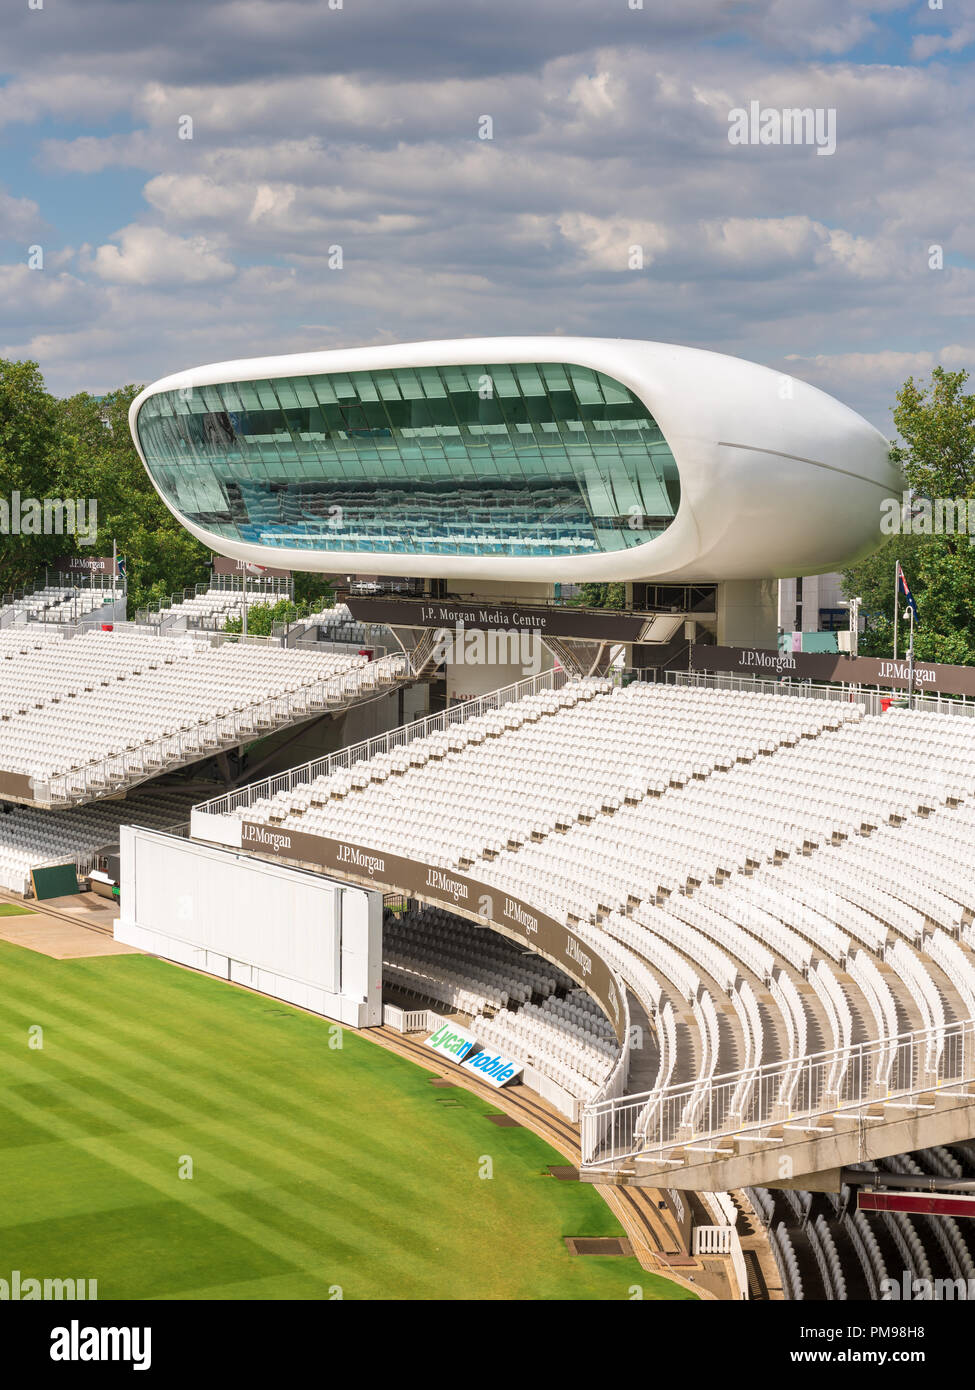 J. P. Morgan Media Center, le Lords Cricket Ground, London, UK Banque D'Images